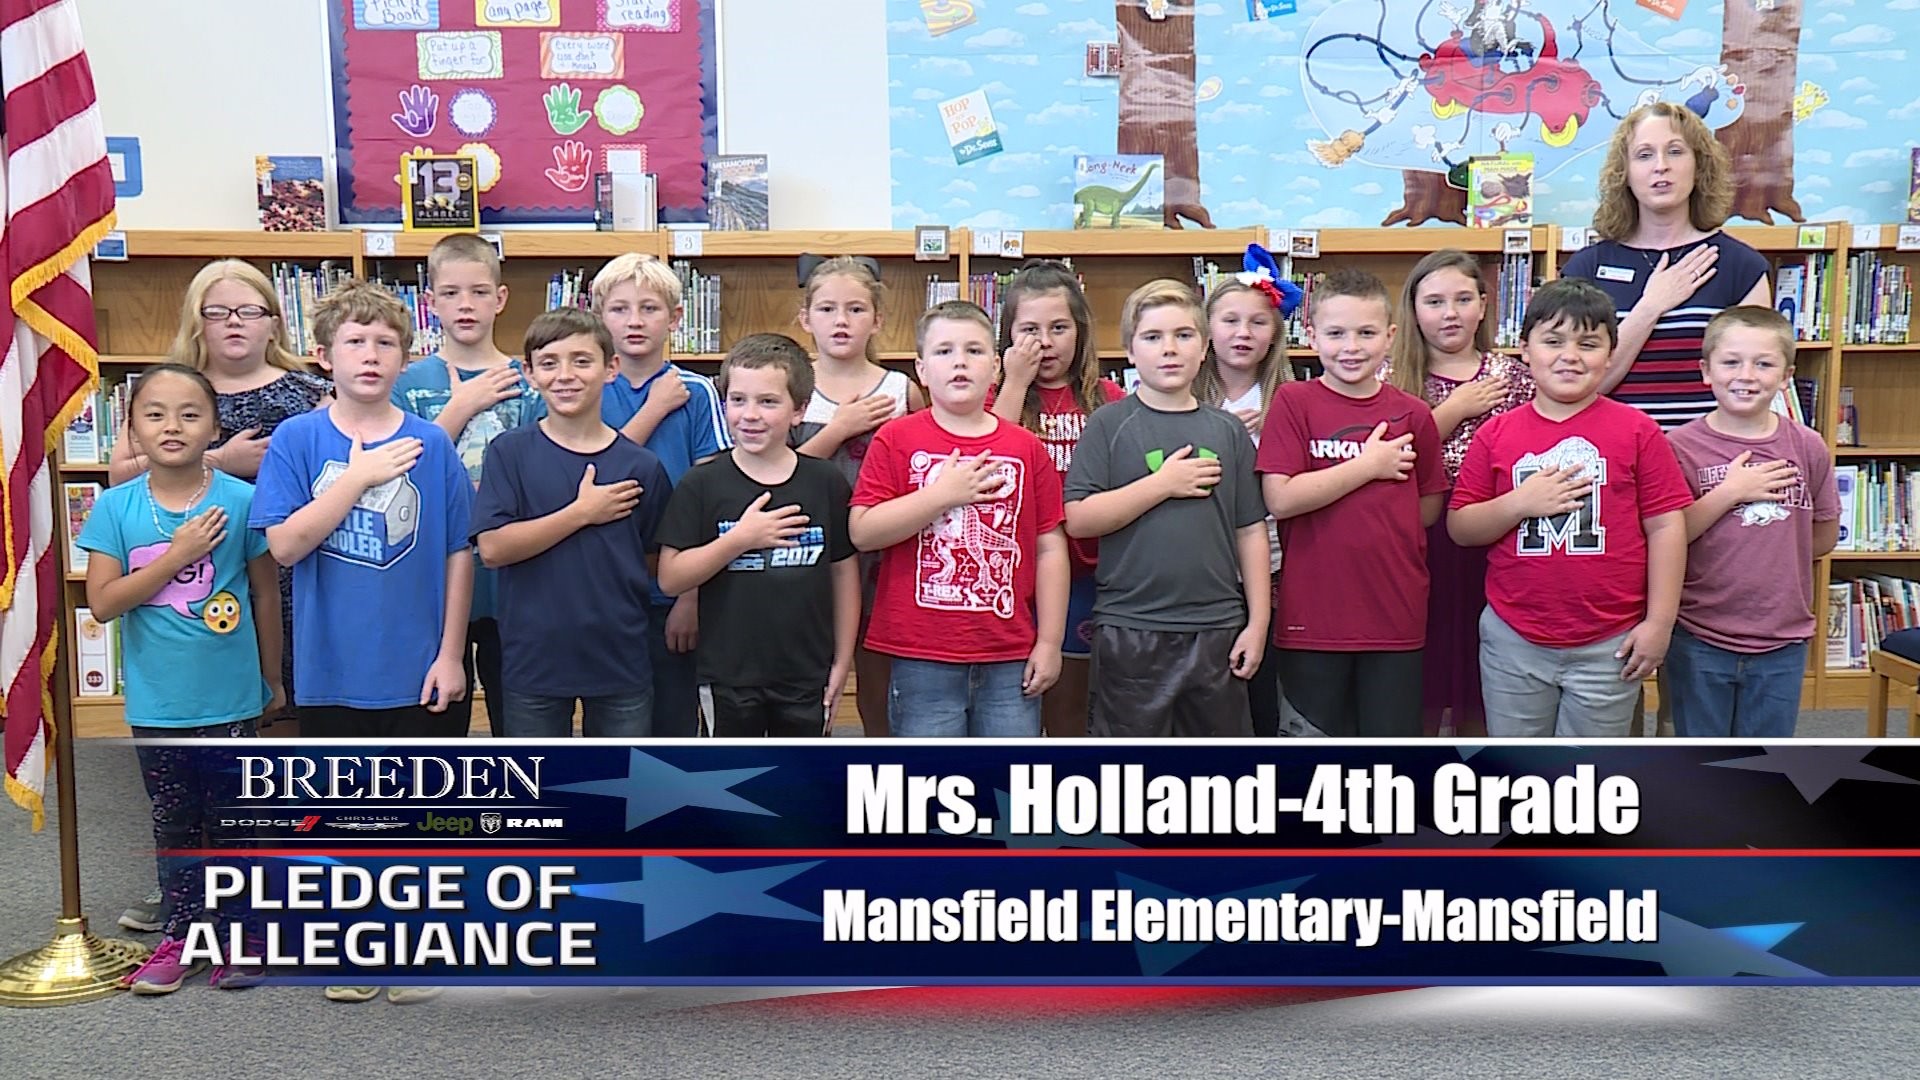 Mrs. Holland  4th Grade Mansfield Elementary, Mansfield